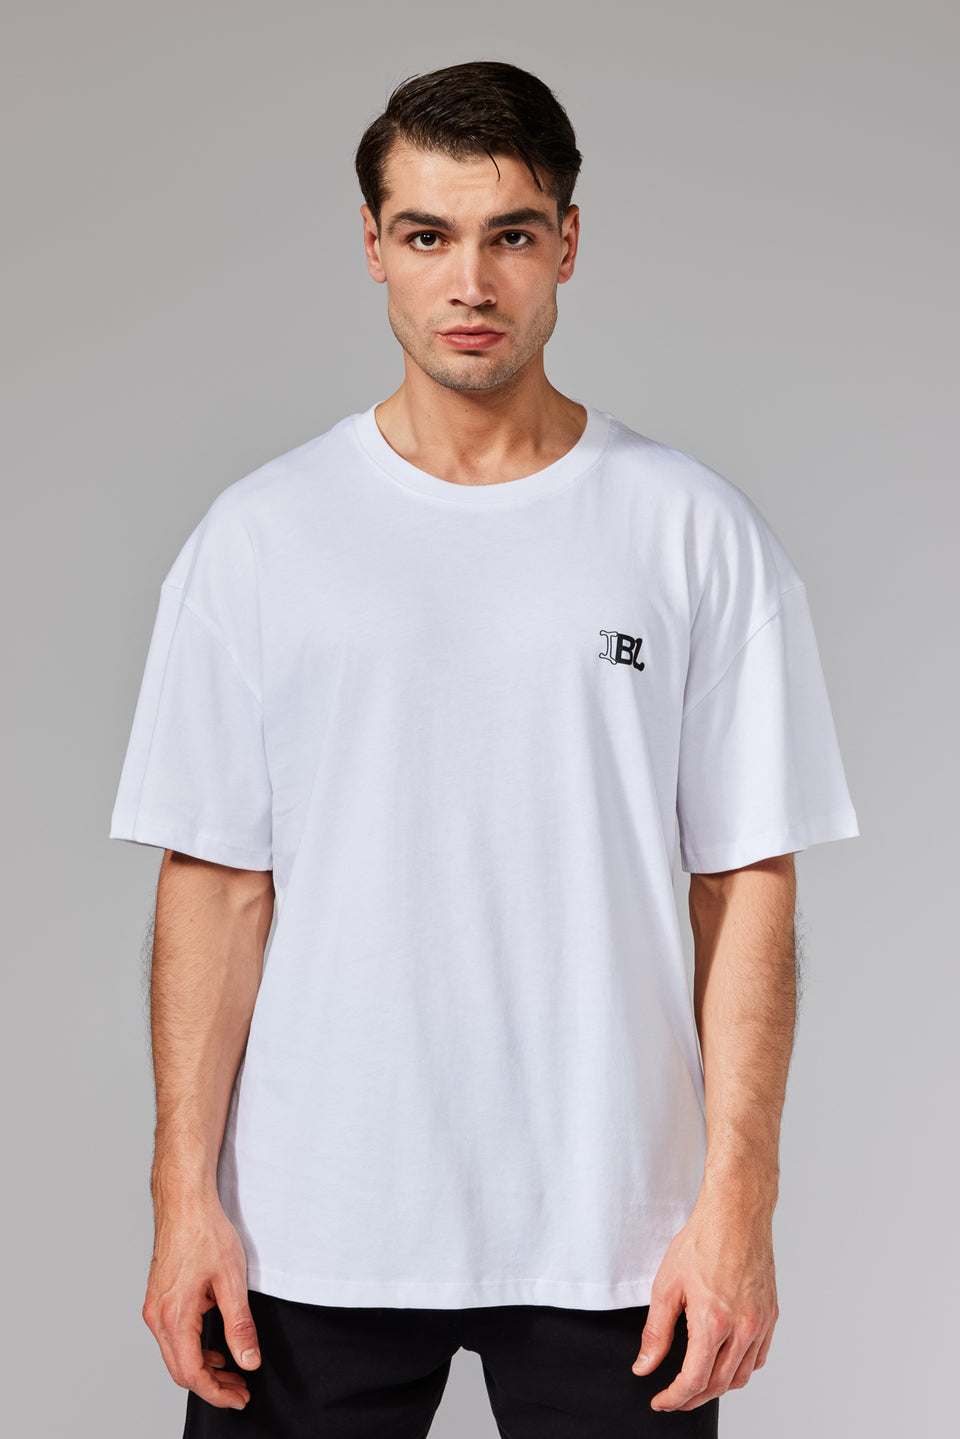 IBL Wavy T-shirt - White